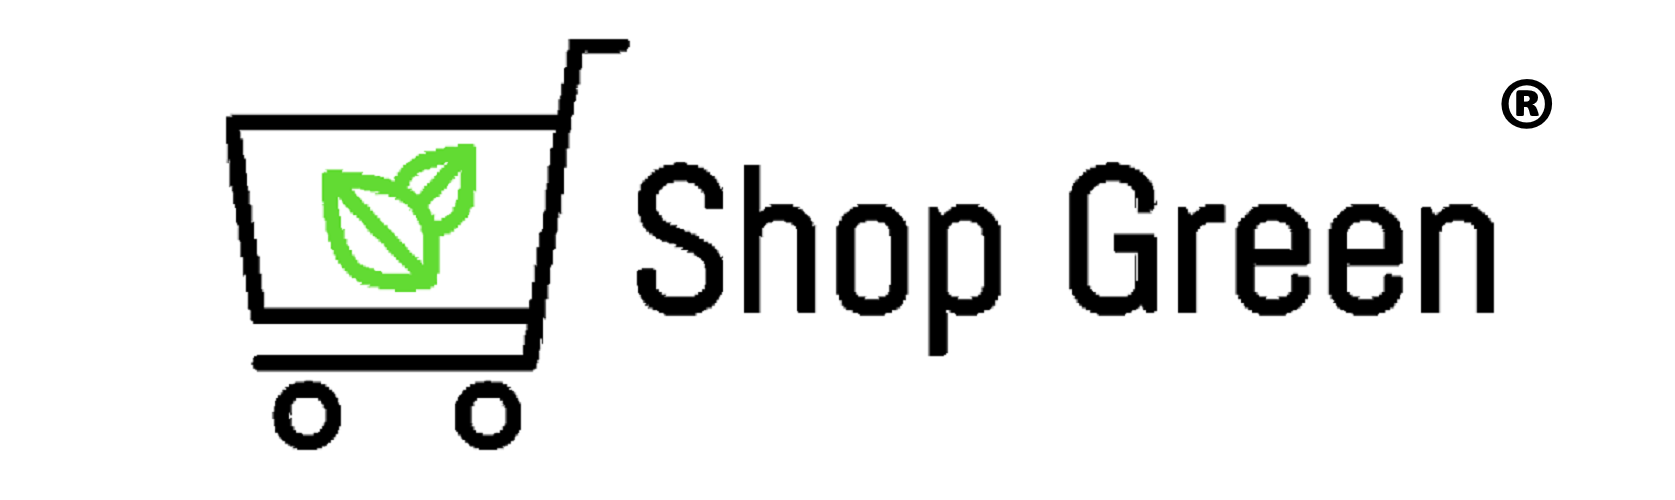 Shop Green Company Logo